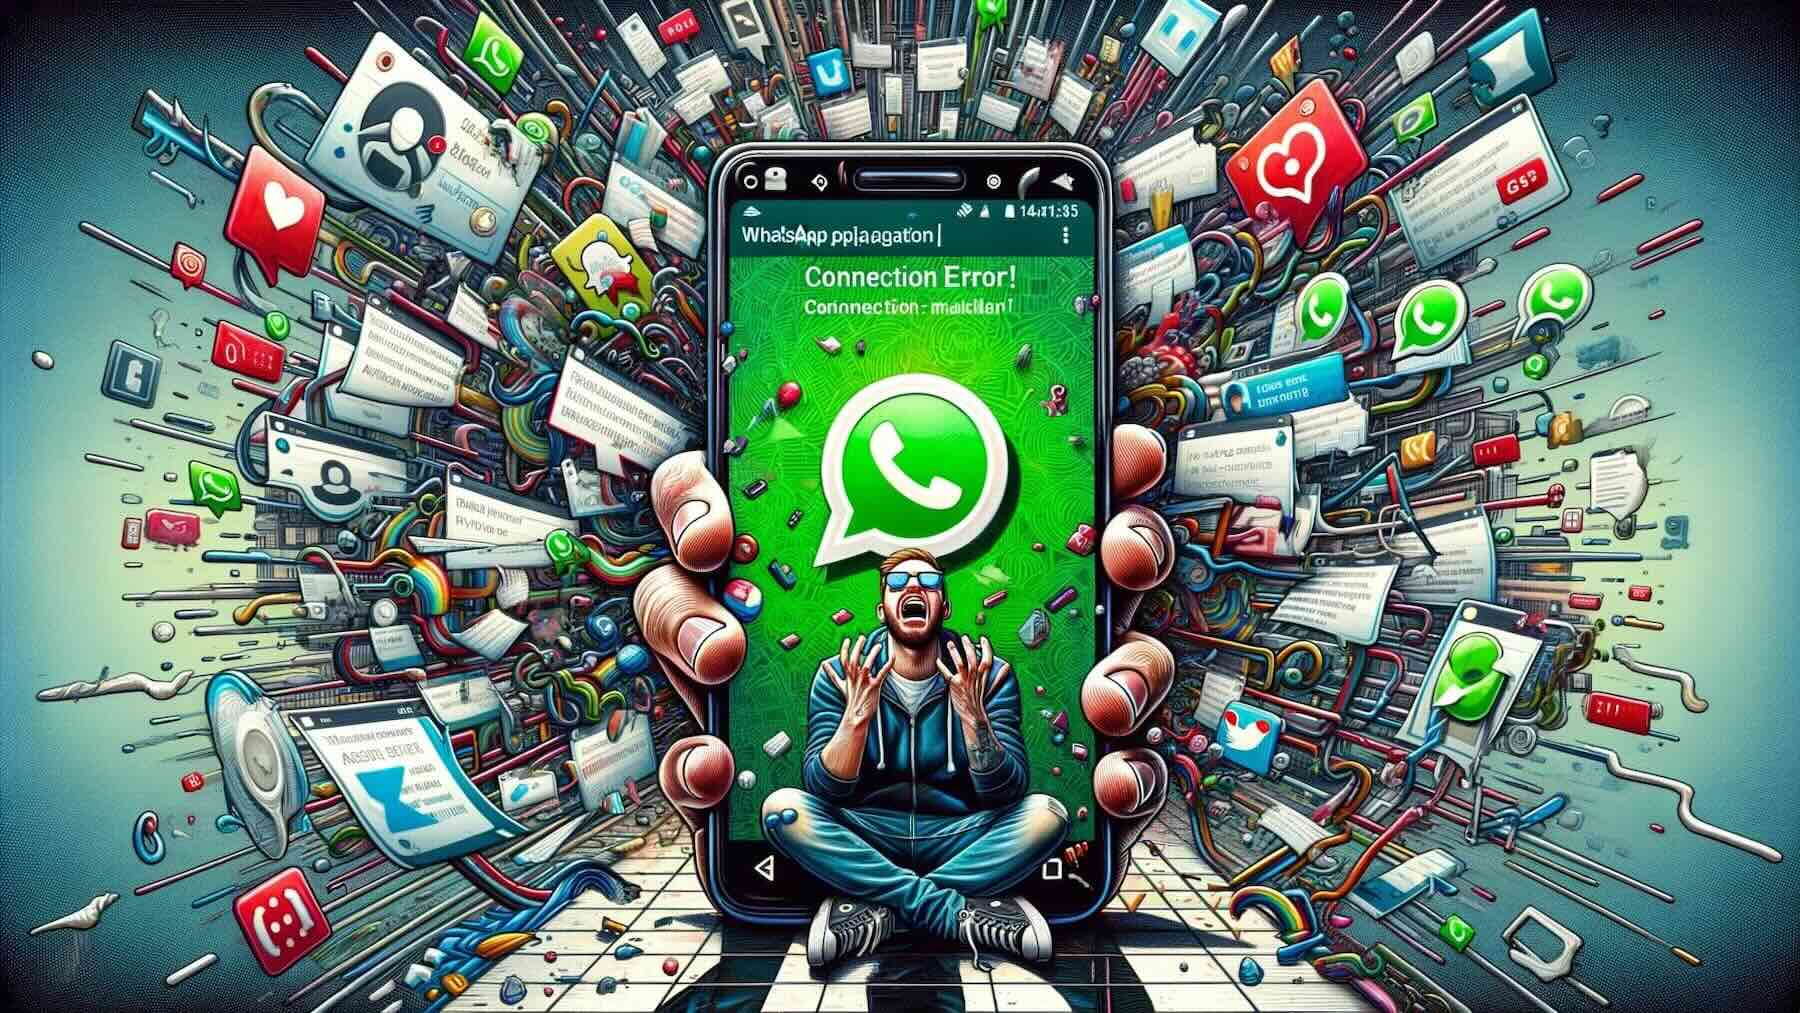 WhatsApp fallando